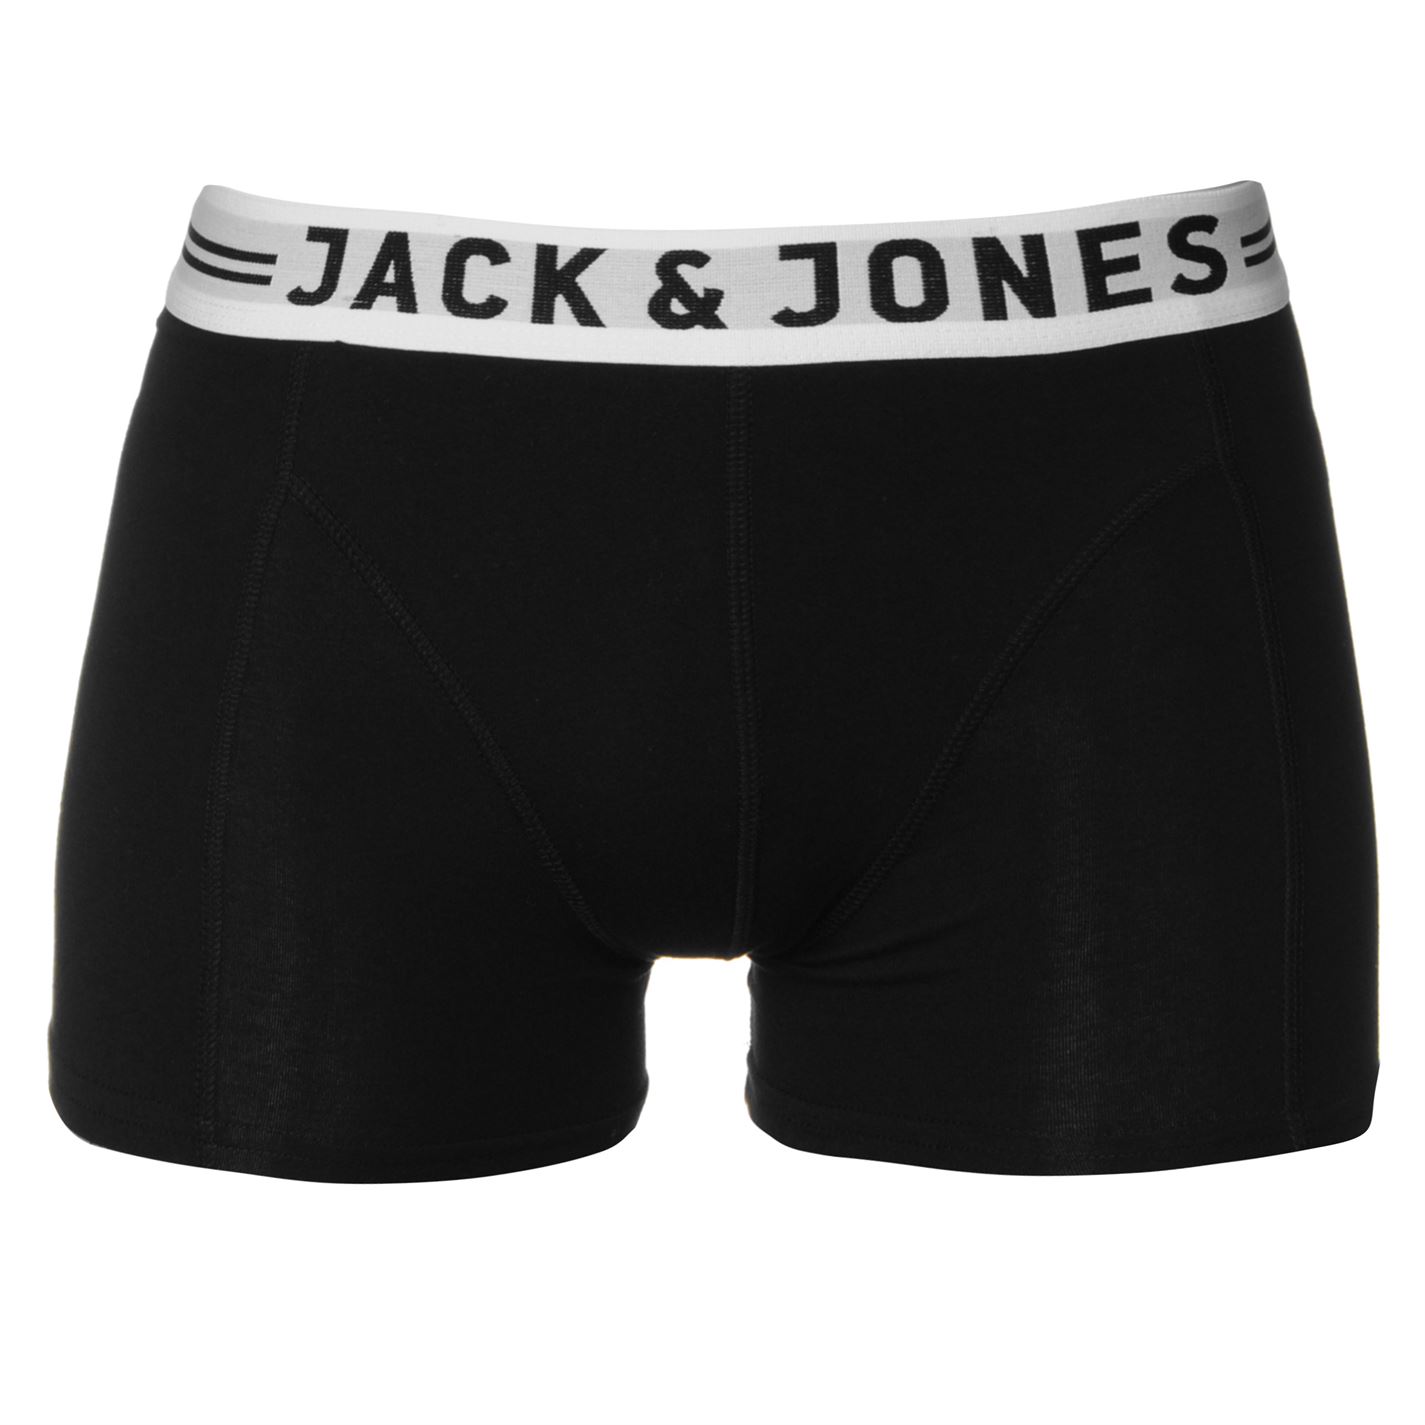 3x Jack and Jones Mens Sense Trunks Set Underwear Boxers Briefs | eBay